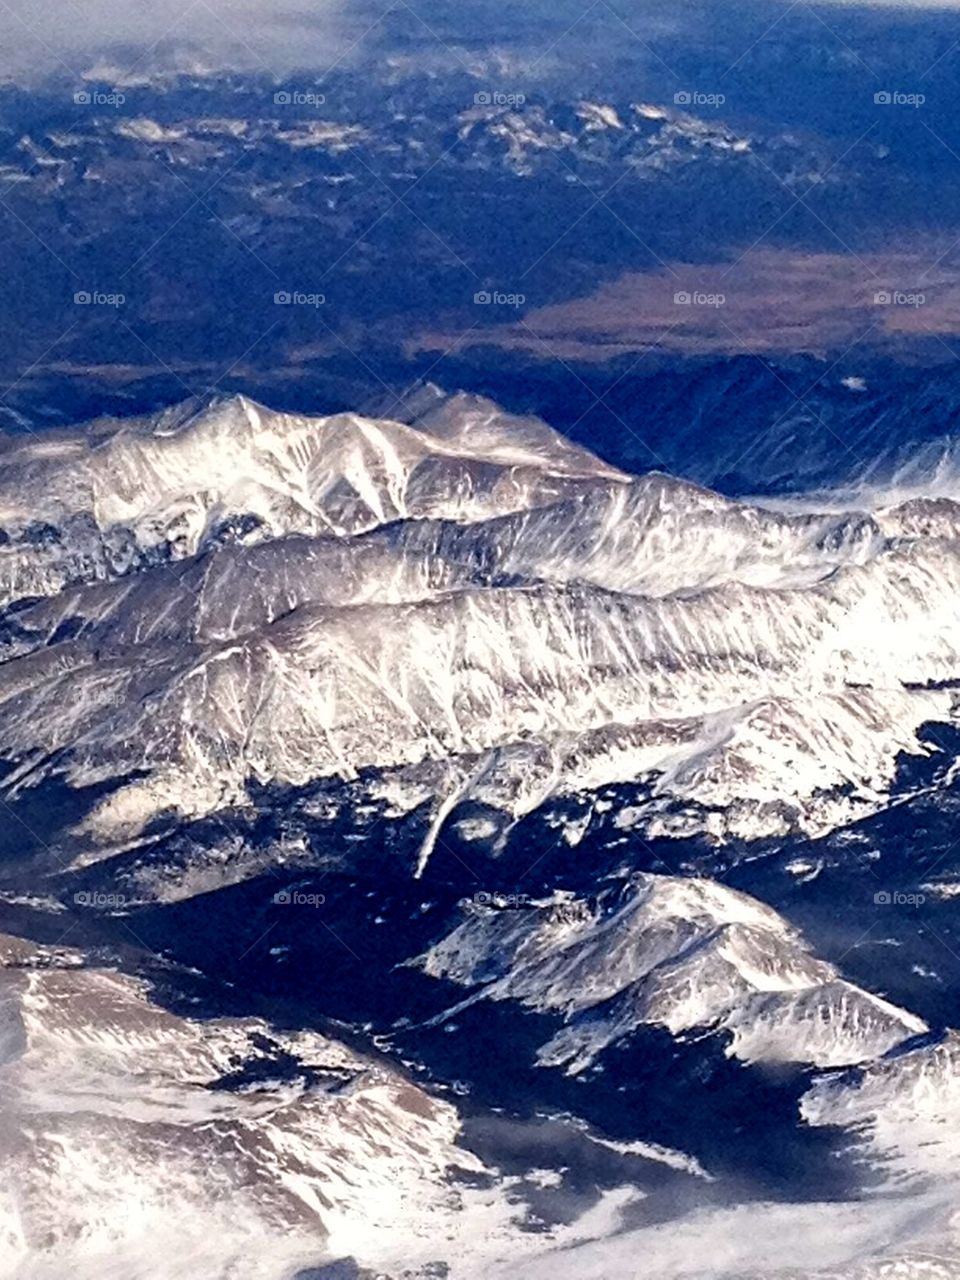 Snow cap mountain. The Rocky Mountains snow covered